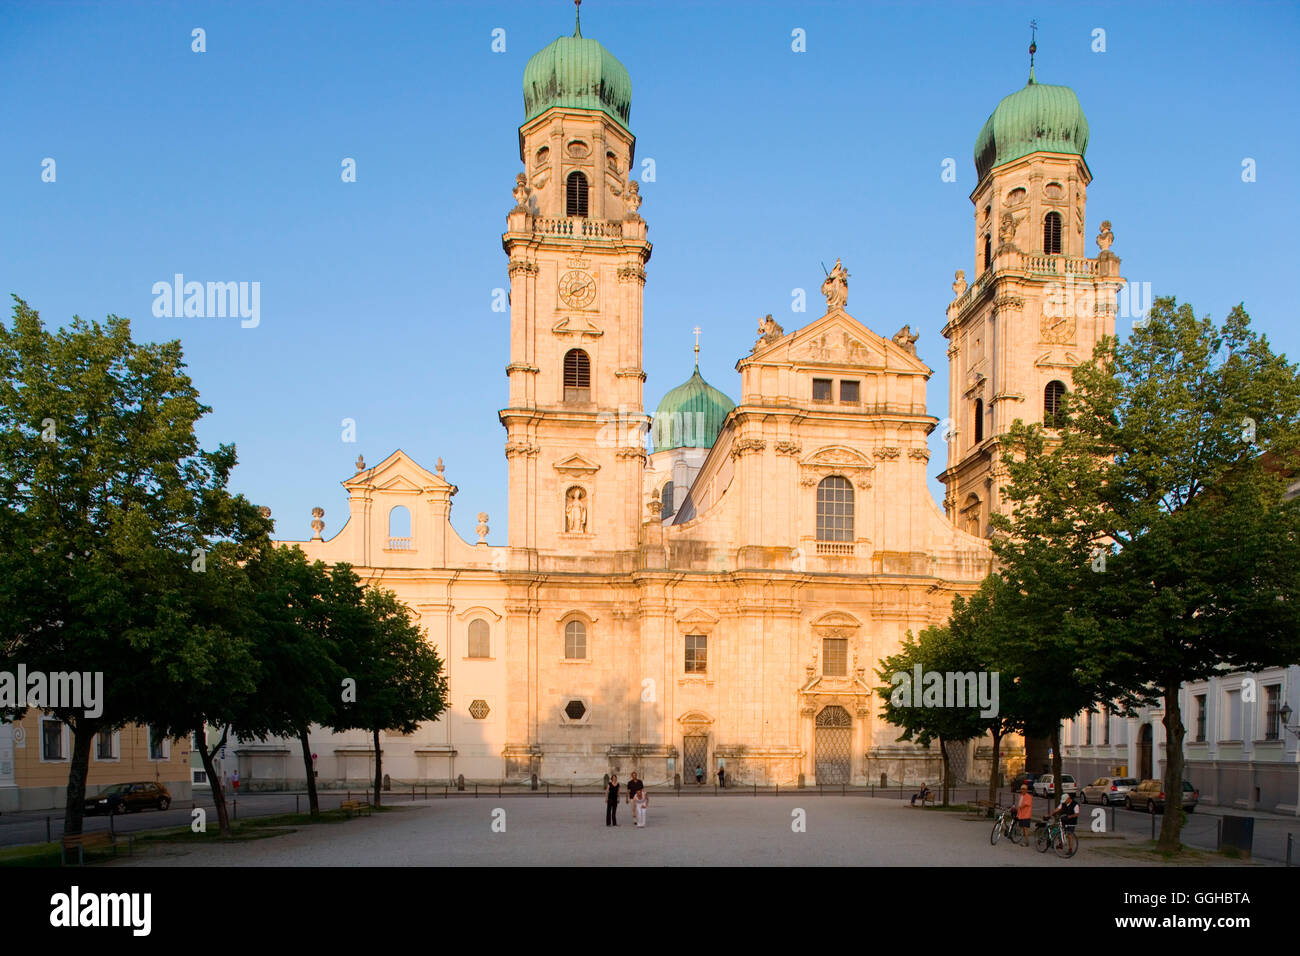 St. Stefan's cathedral, Passau, Lower Bavaria, Bavaria, Germany Stock Photo